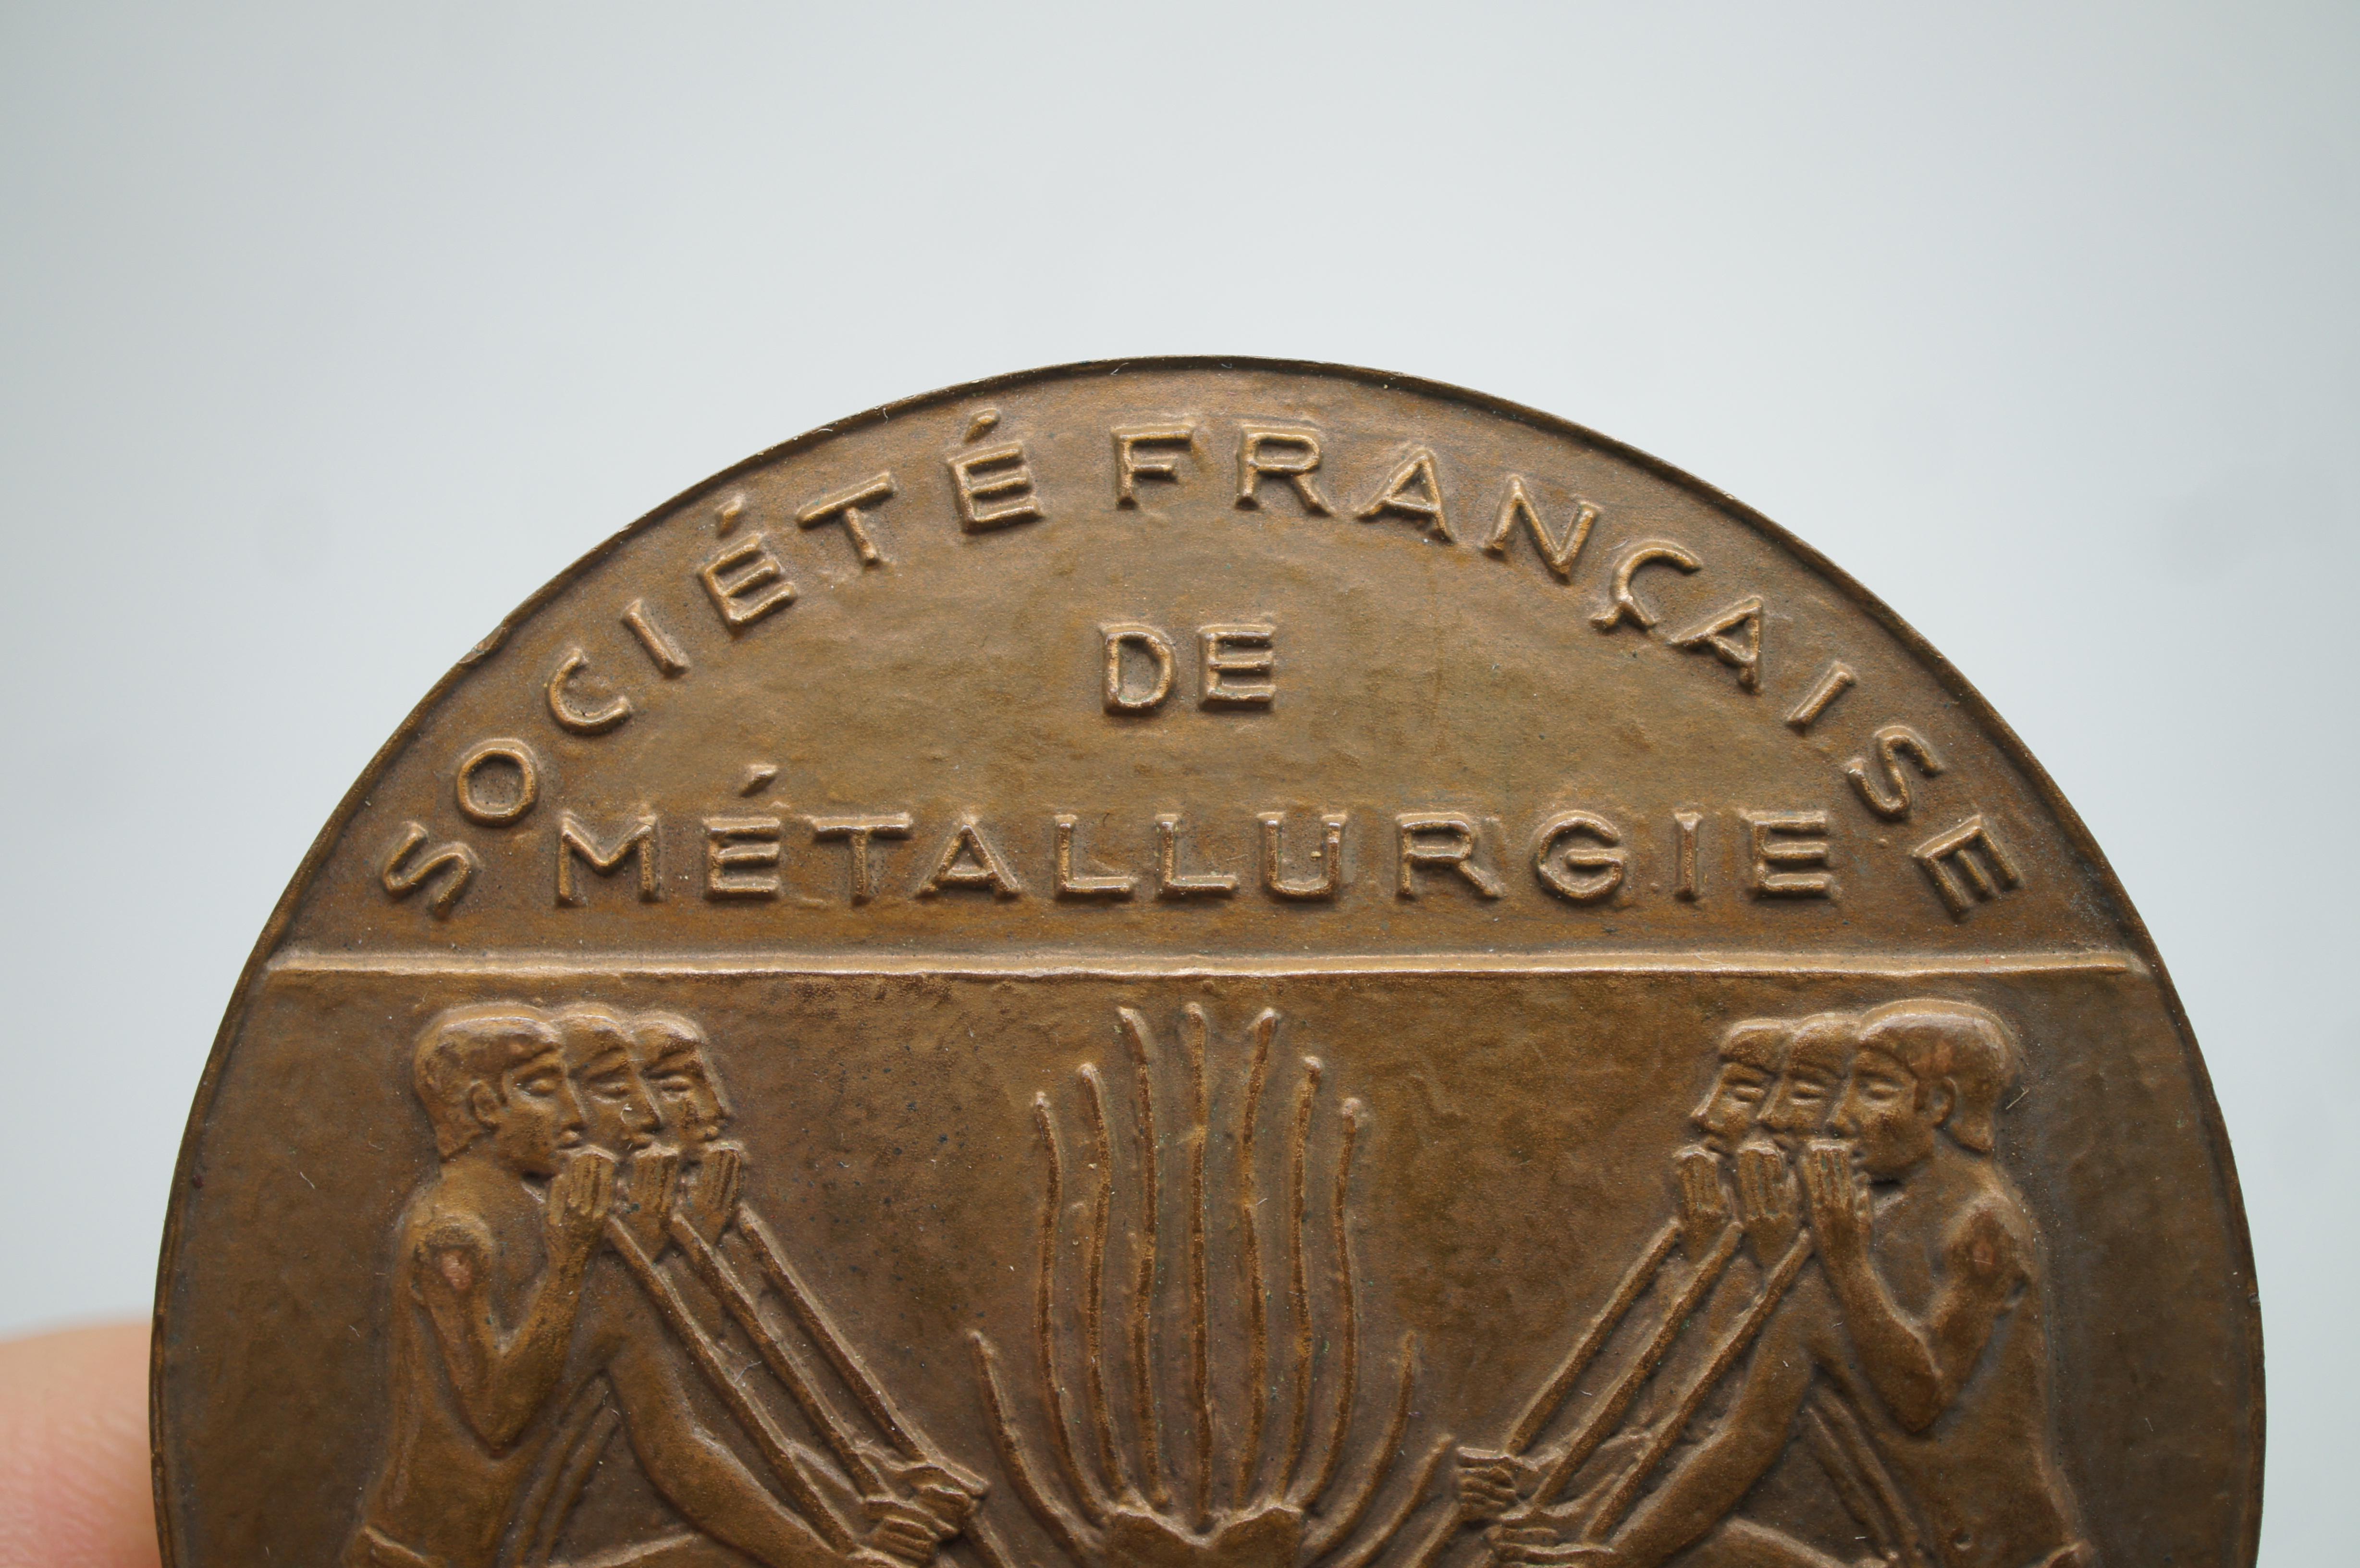 Pierre Turin Societe Francaise de Metallurgie Bronze Award Medal Paris France 2